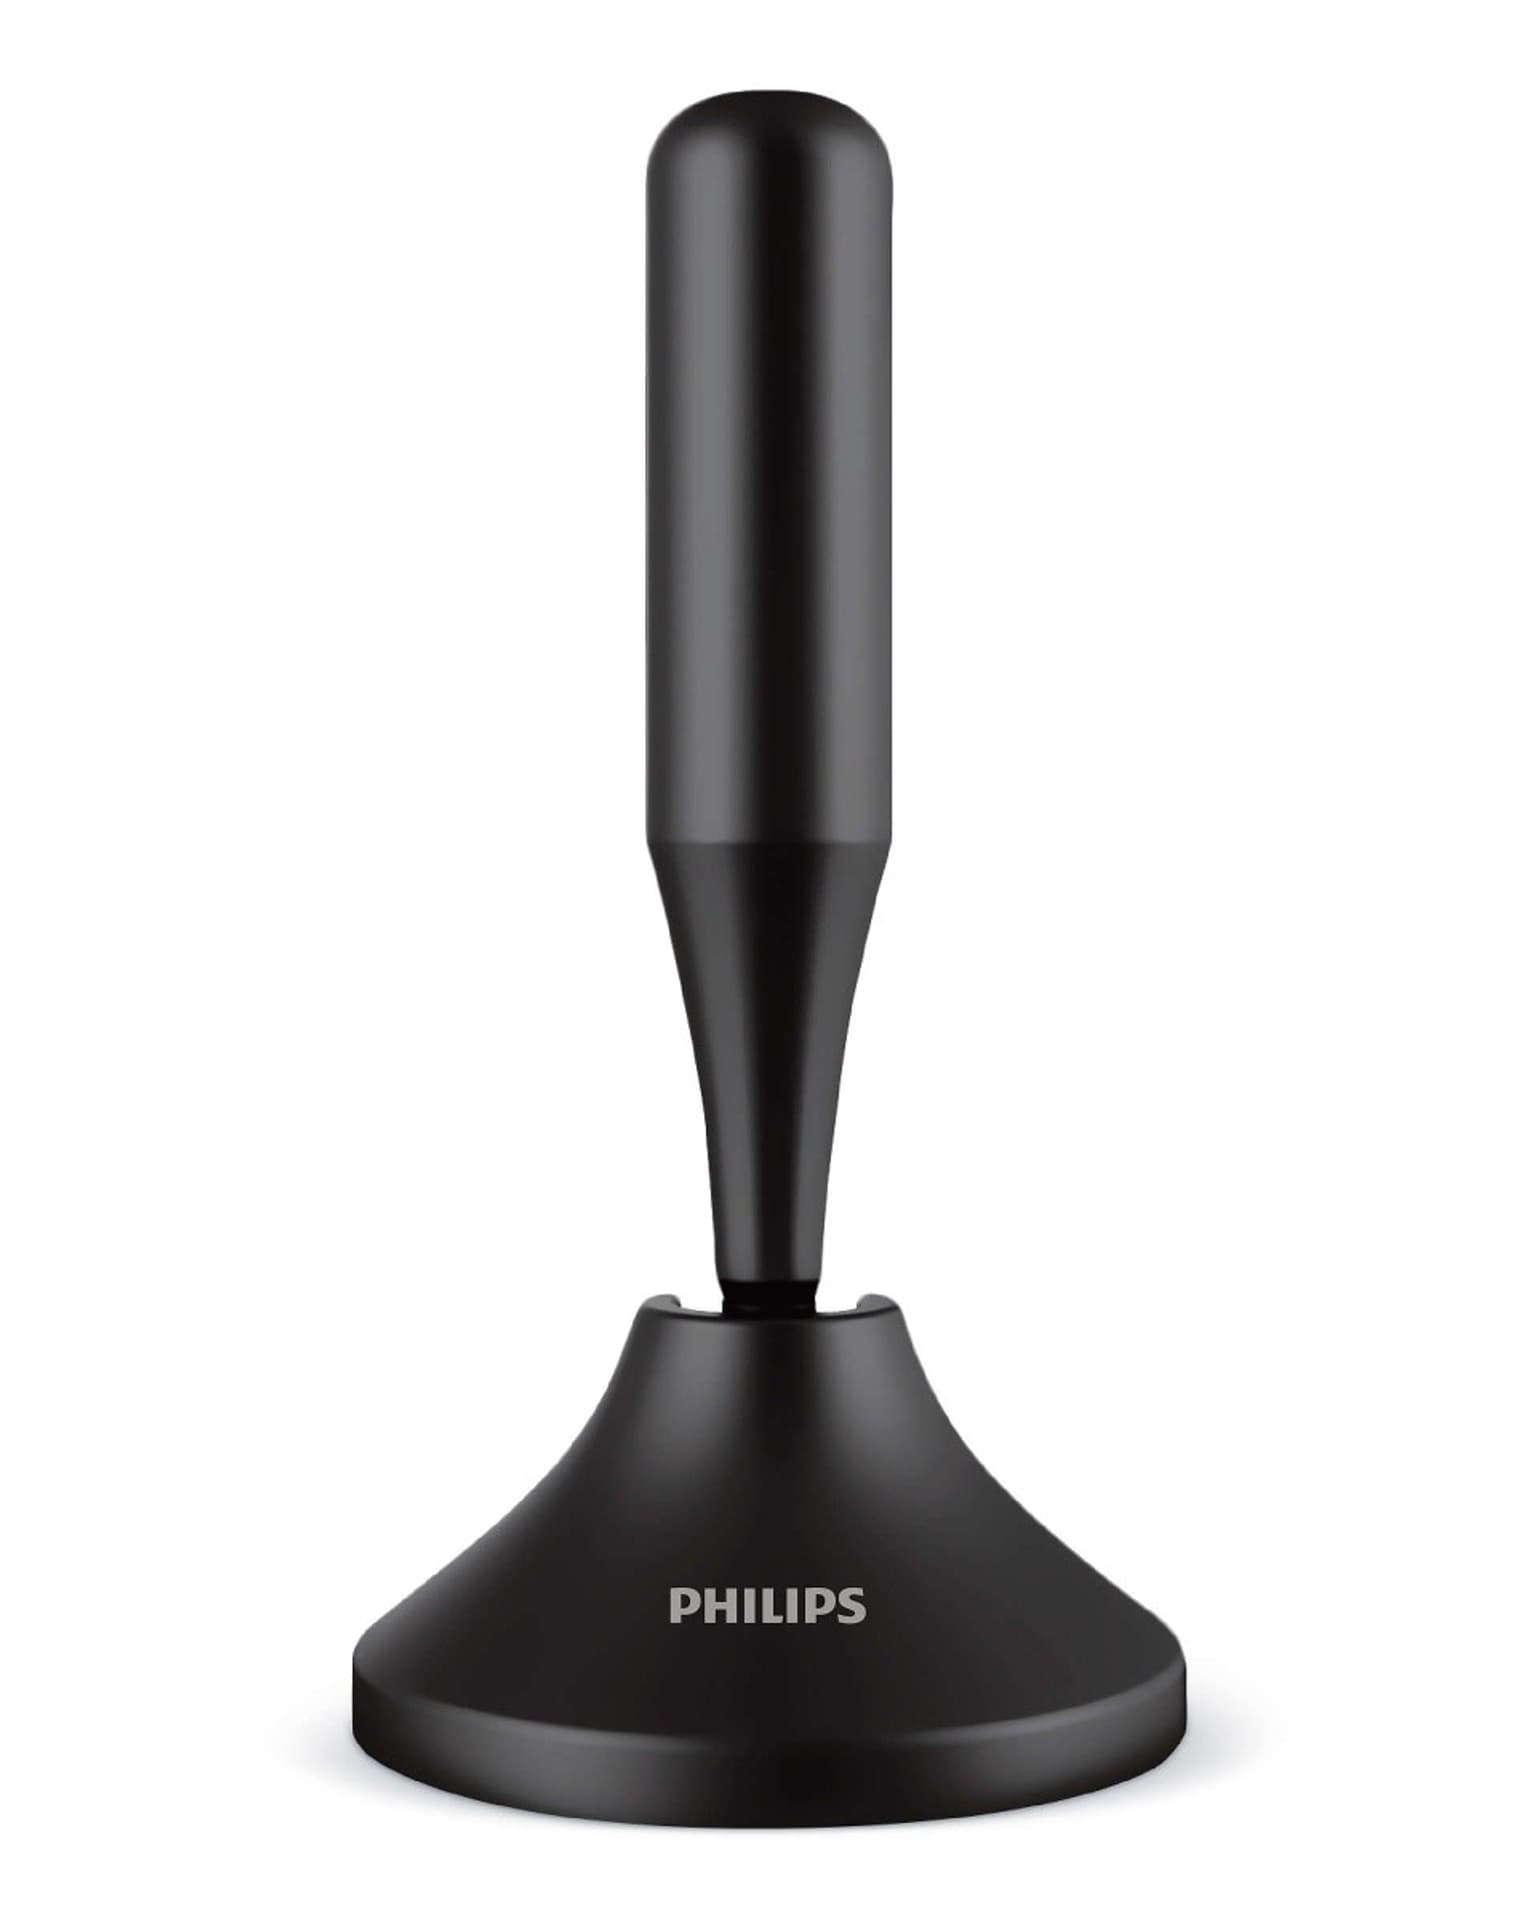 PHILIPS Phil-SDV5300/12